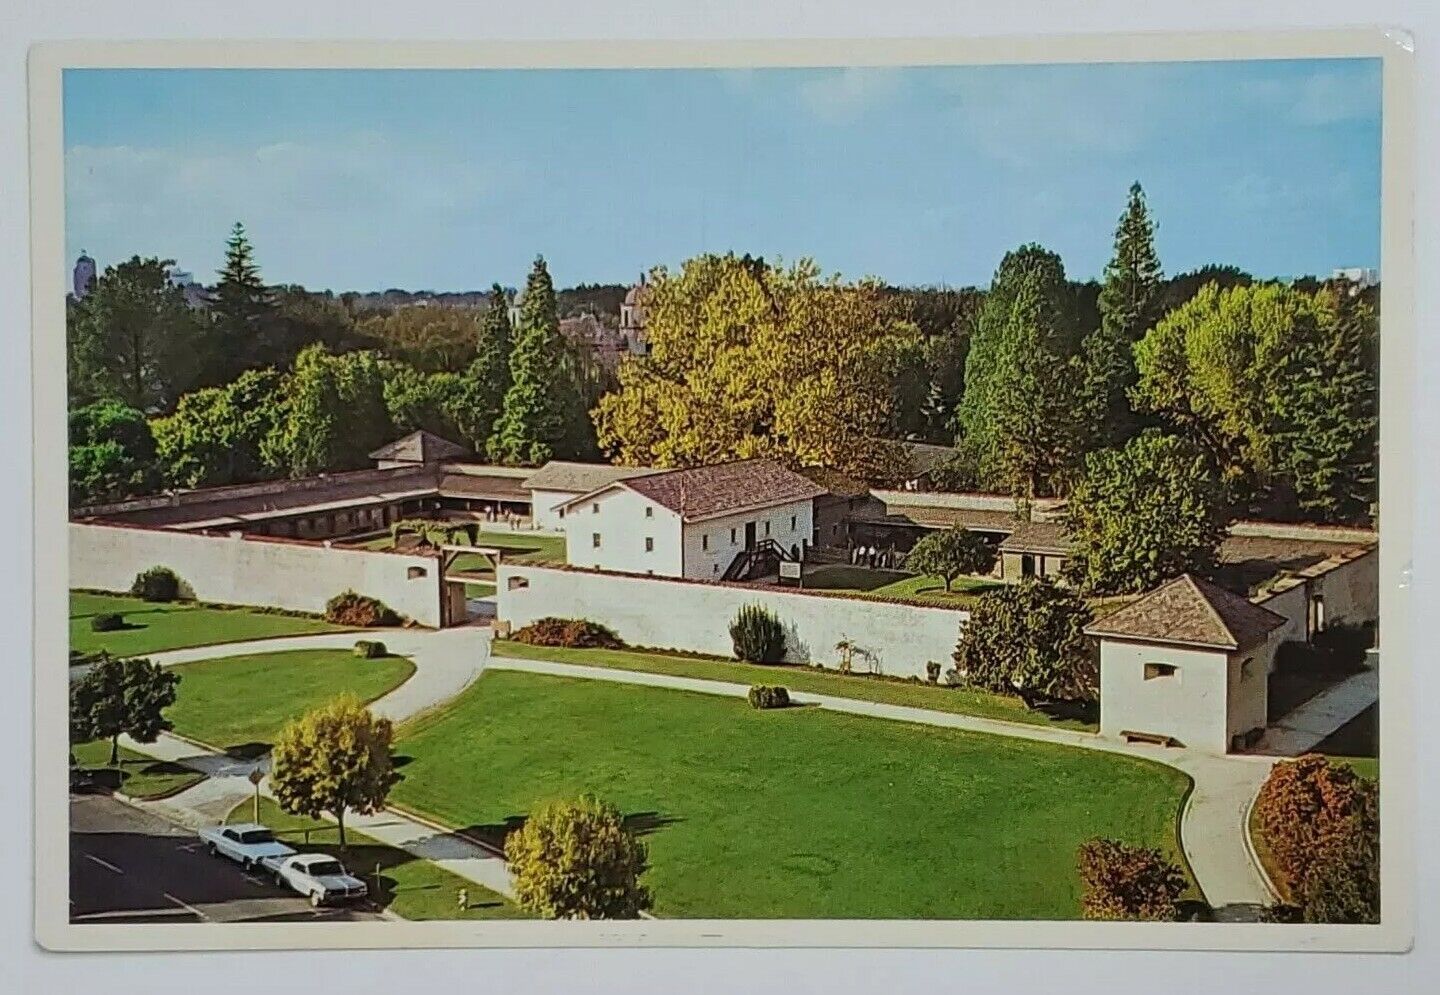 Postcard Sutter’s Fort Sacramento California USA Pioneer Trading Post 1800s A2